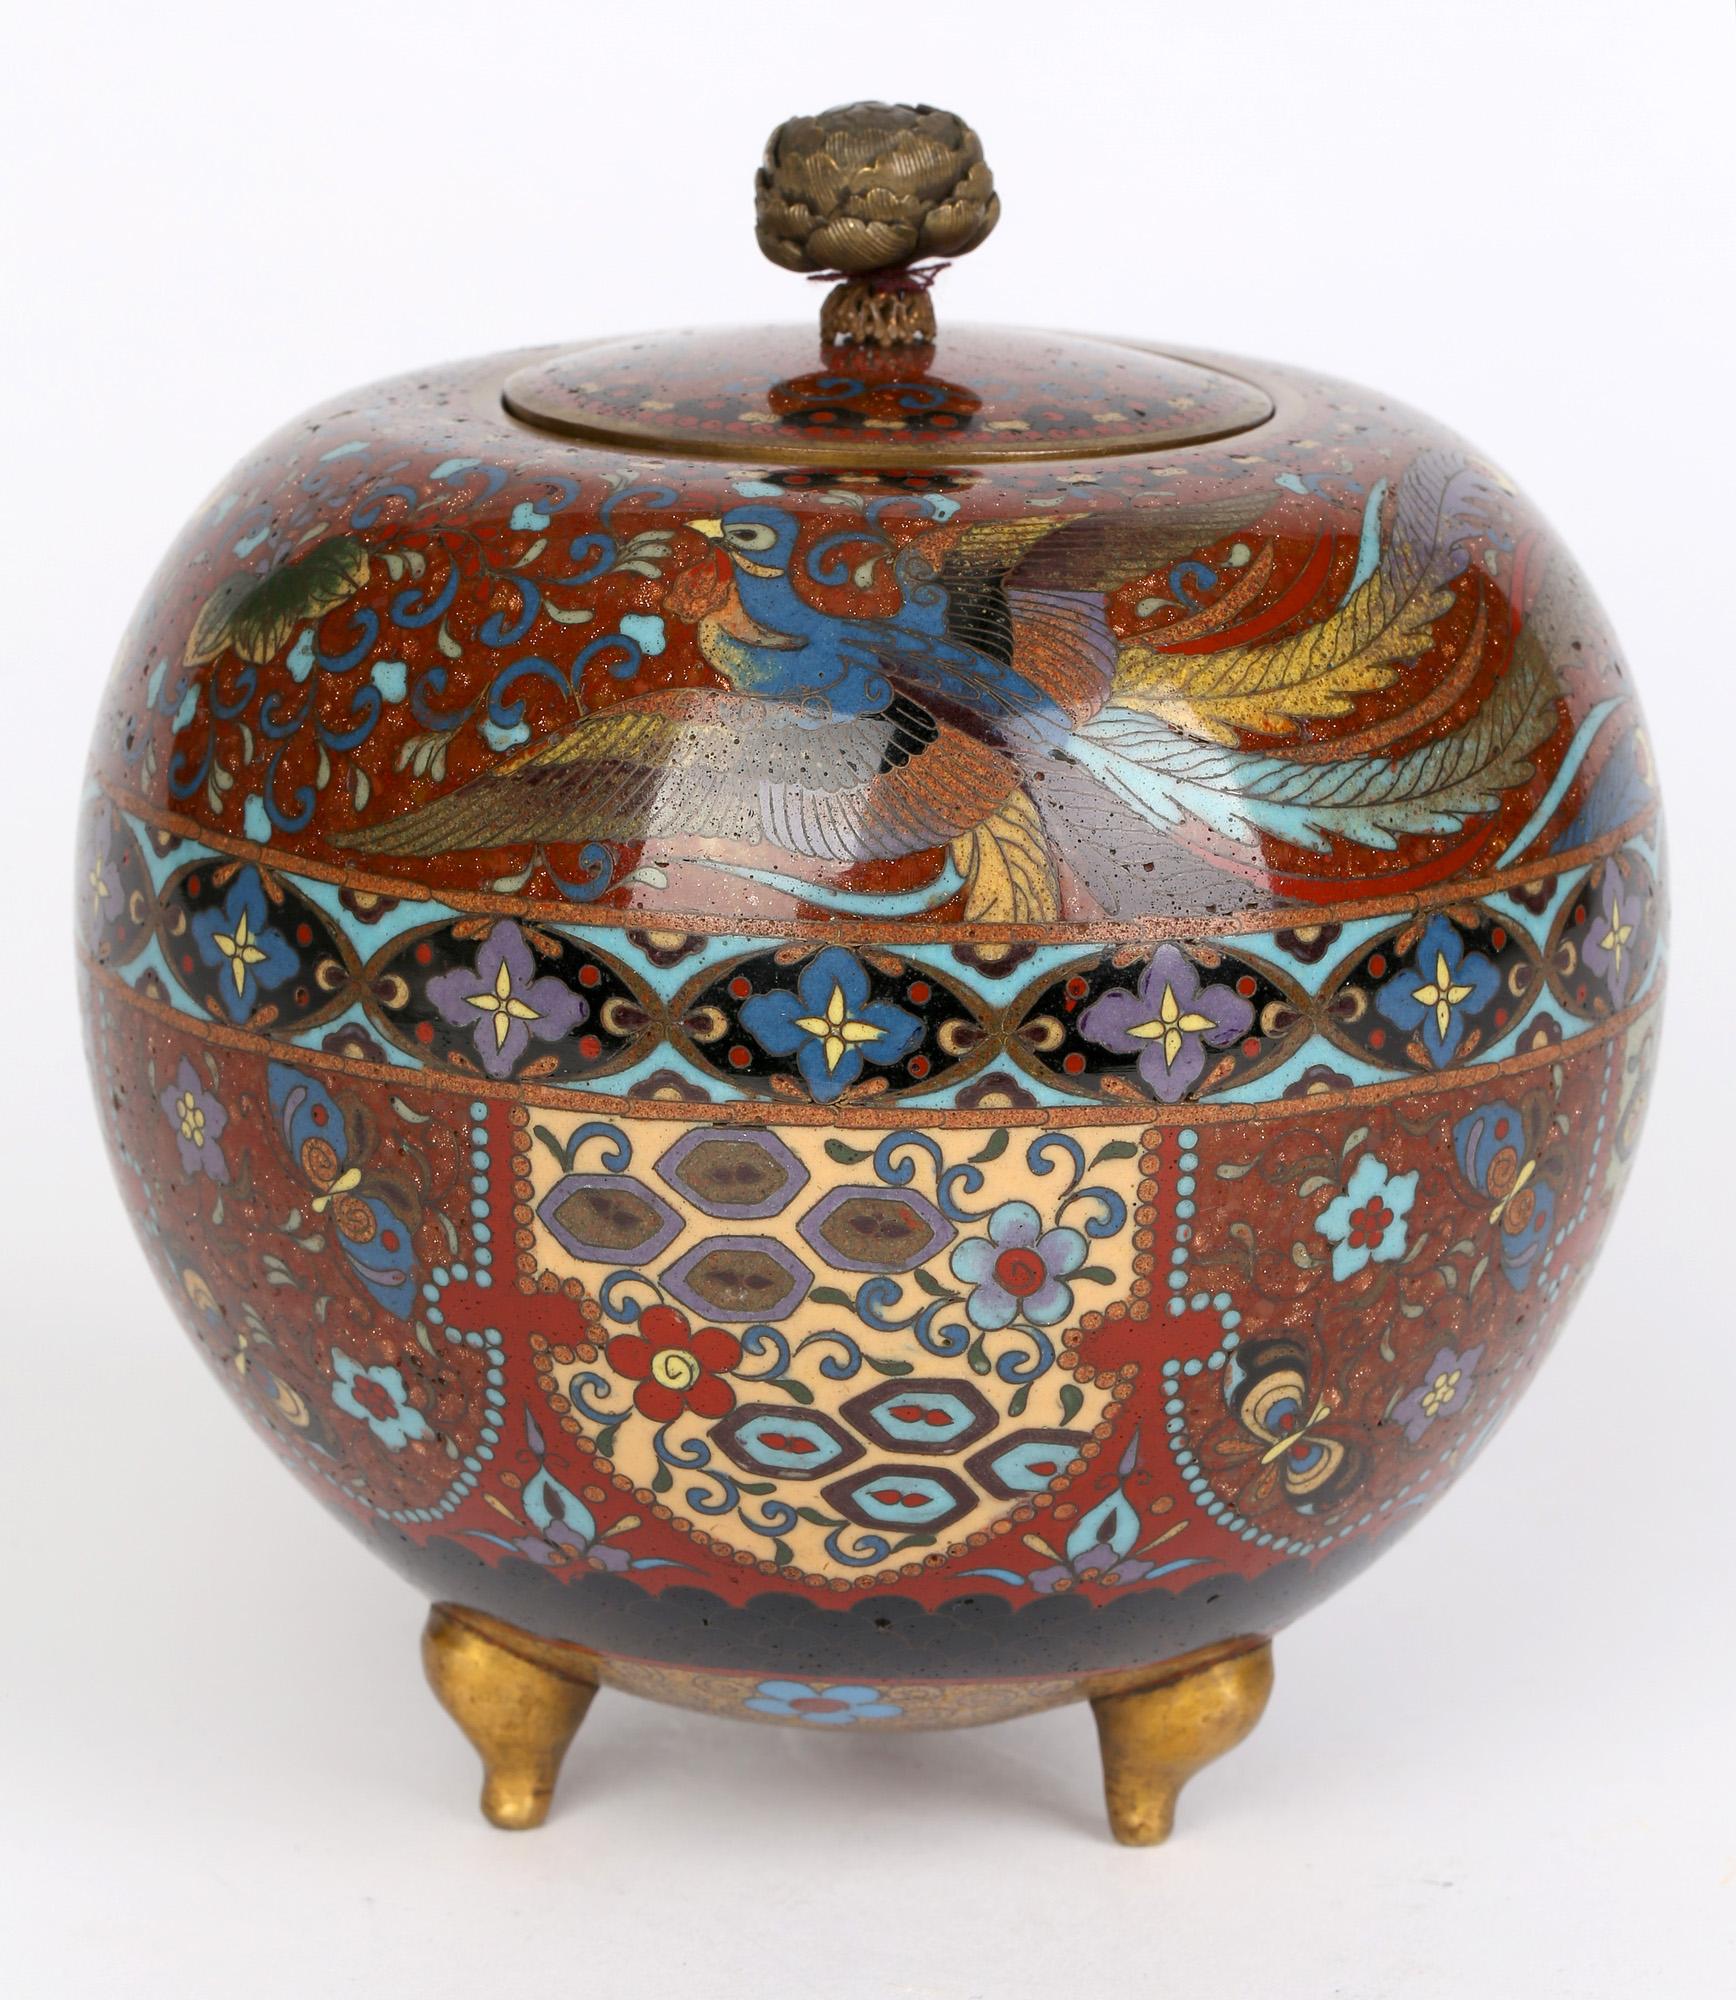 19th Century Japanese Meiji Cloisonné Tea Caddy with Panels and Ho Ho Birds